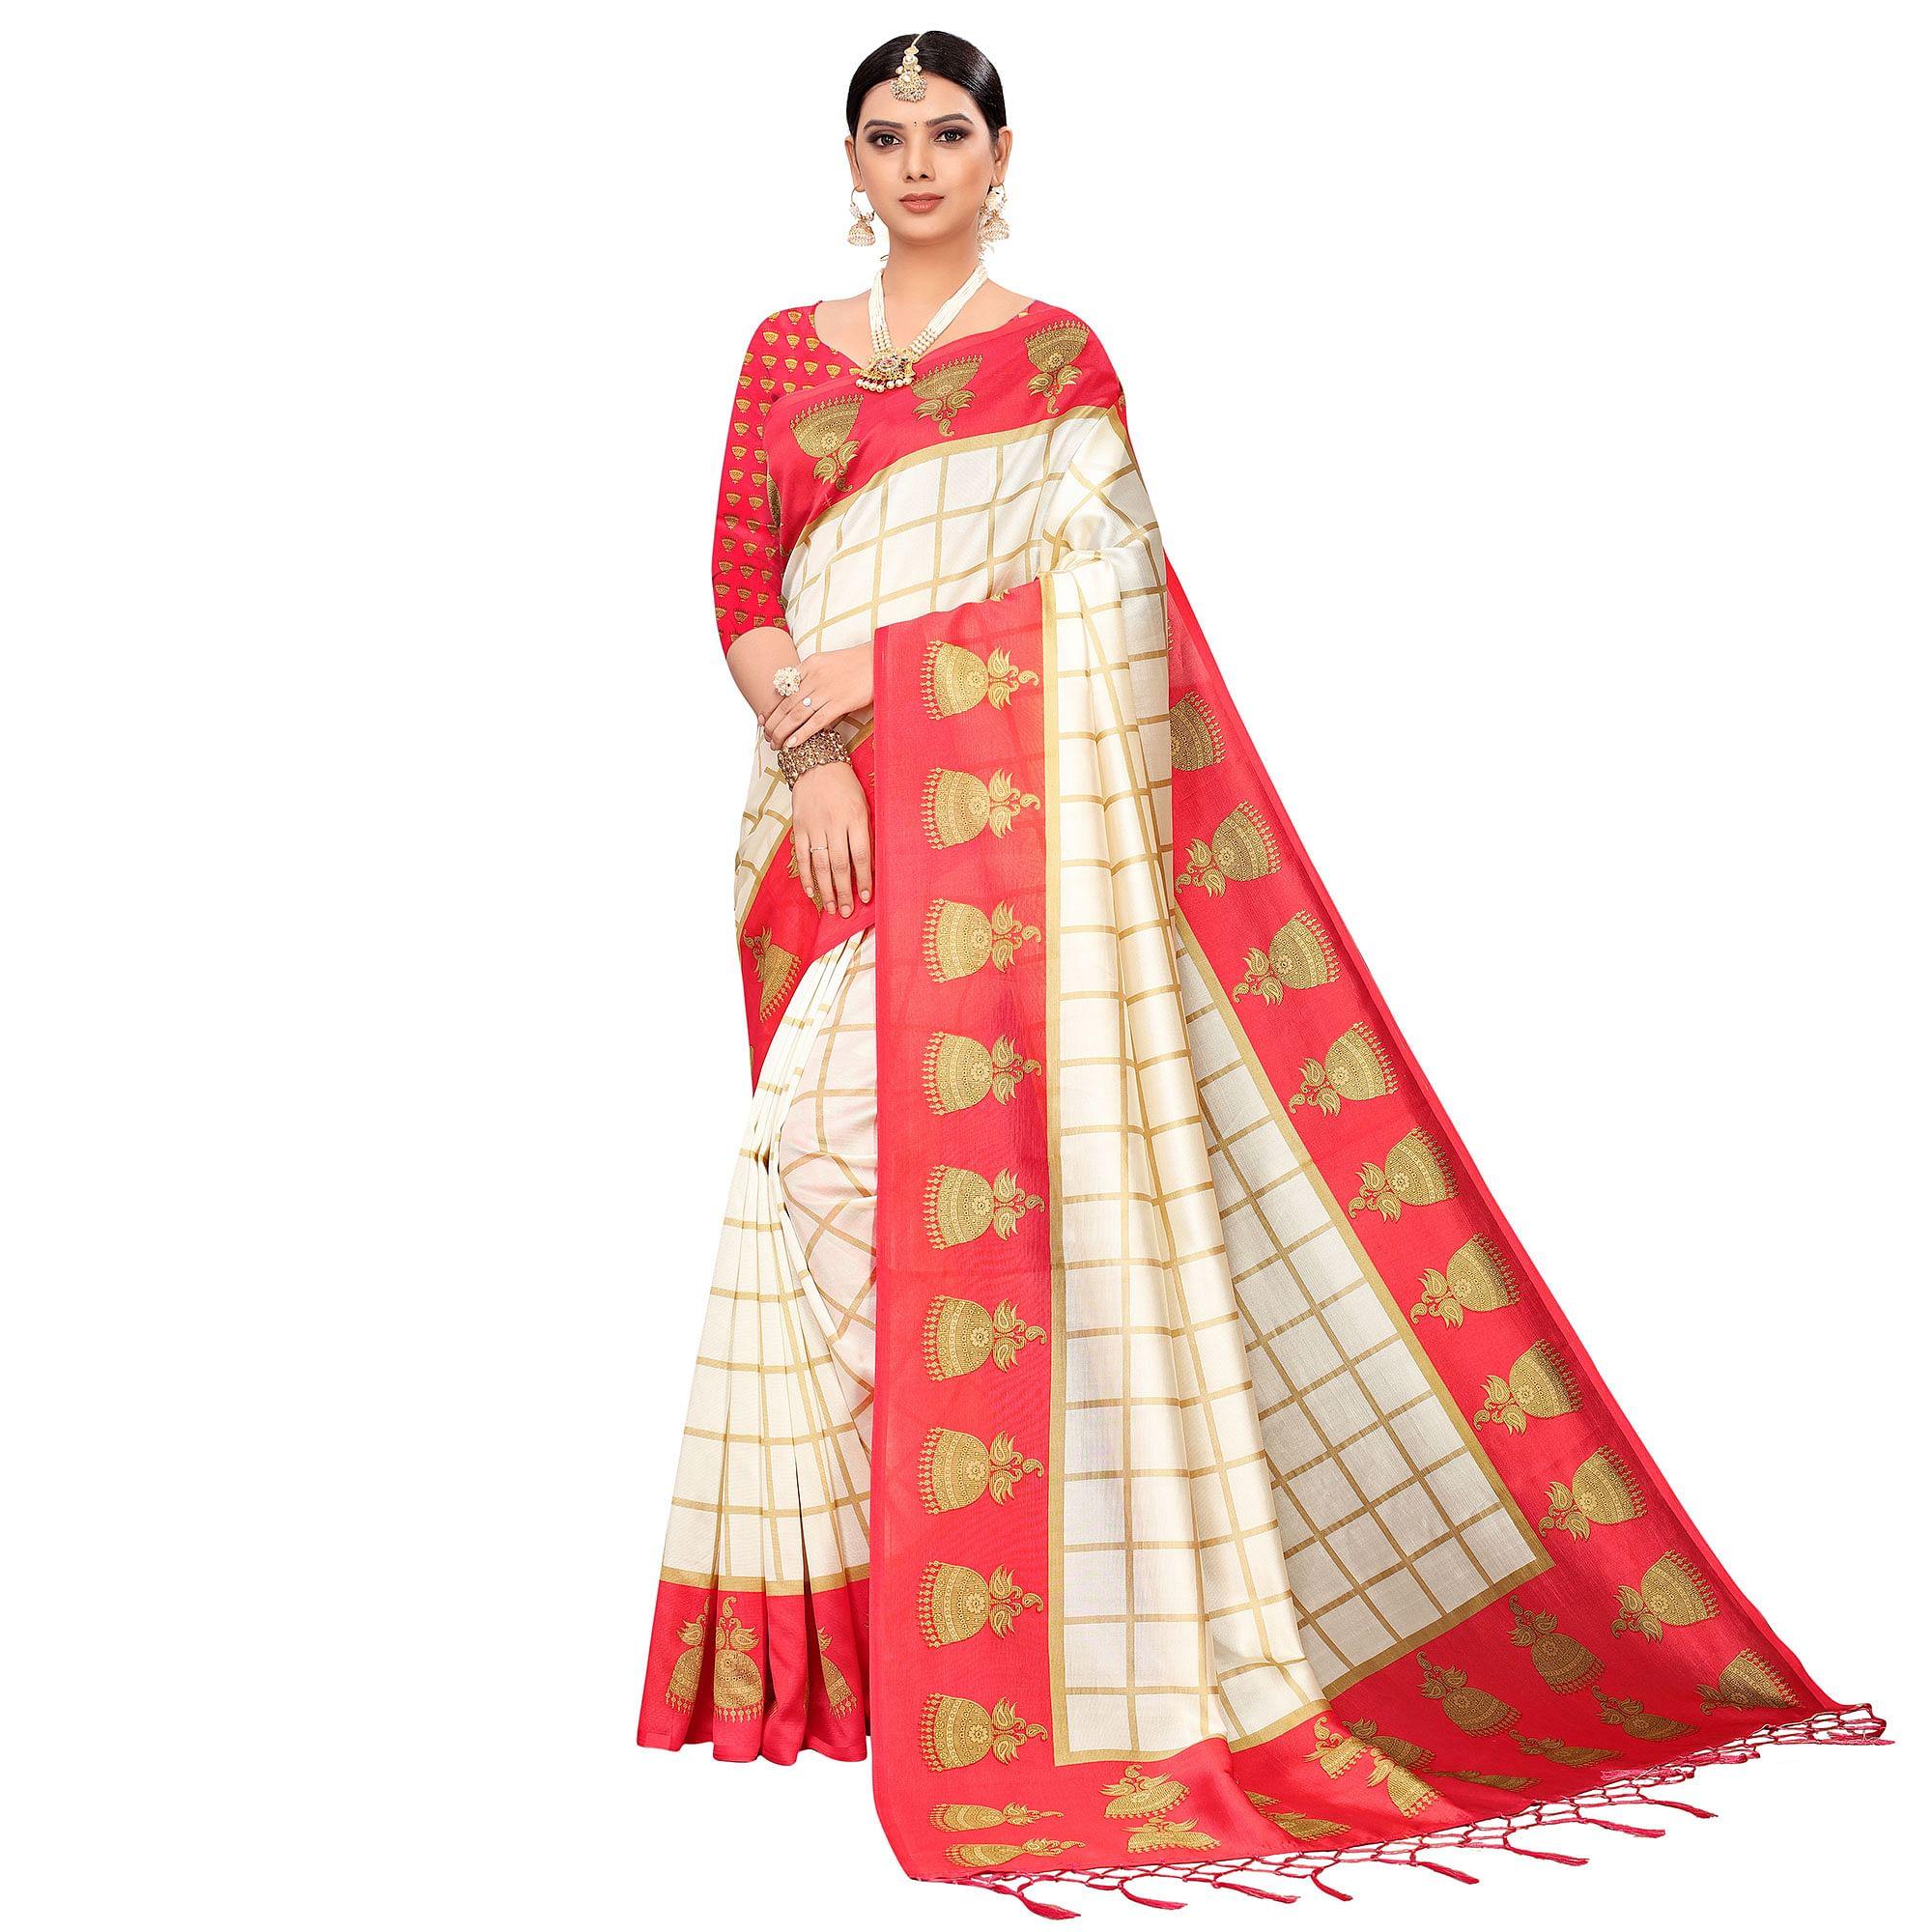 Charming Off White-Red Colored Festive Wear Printed Mysore Silk Saree - Peachmode